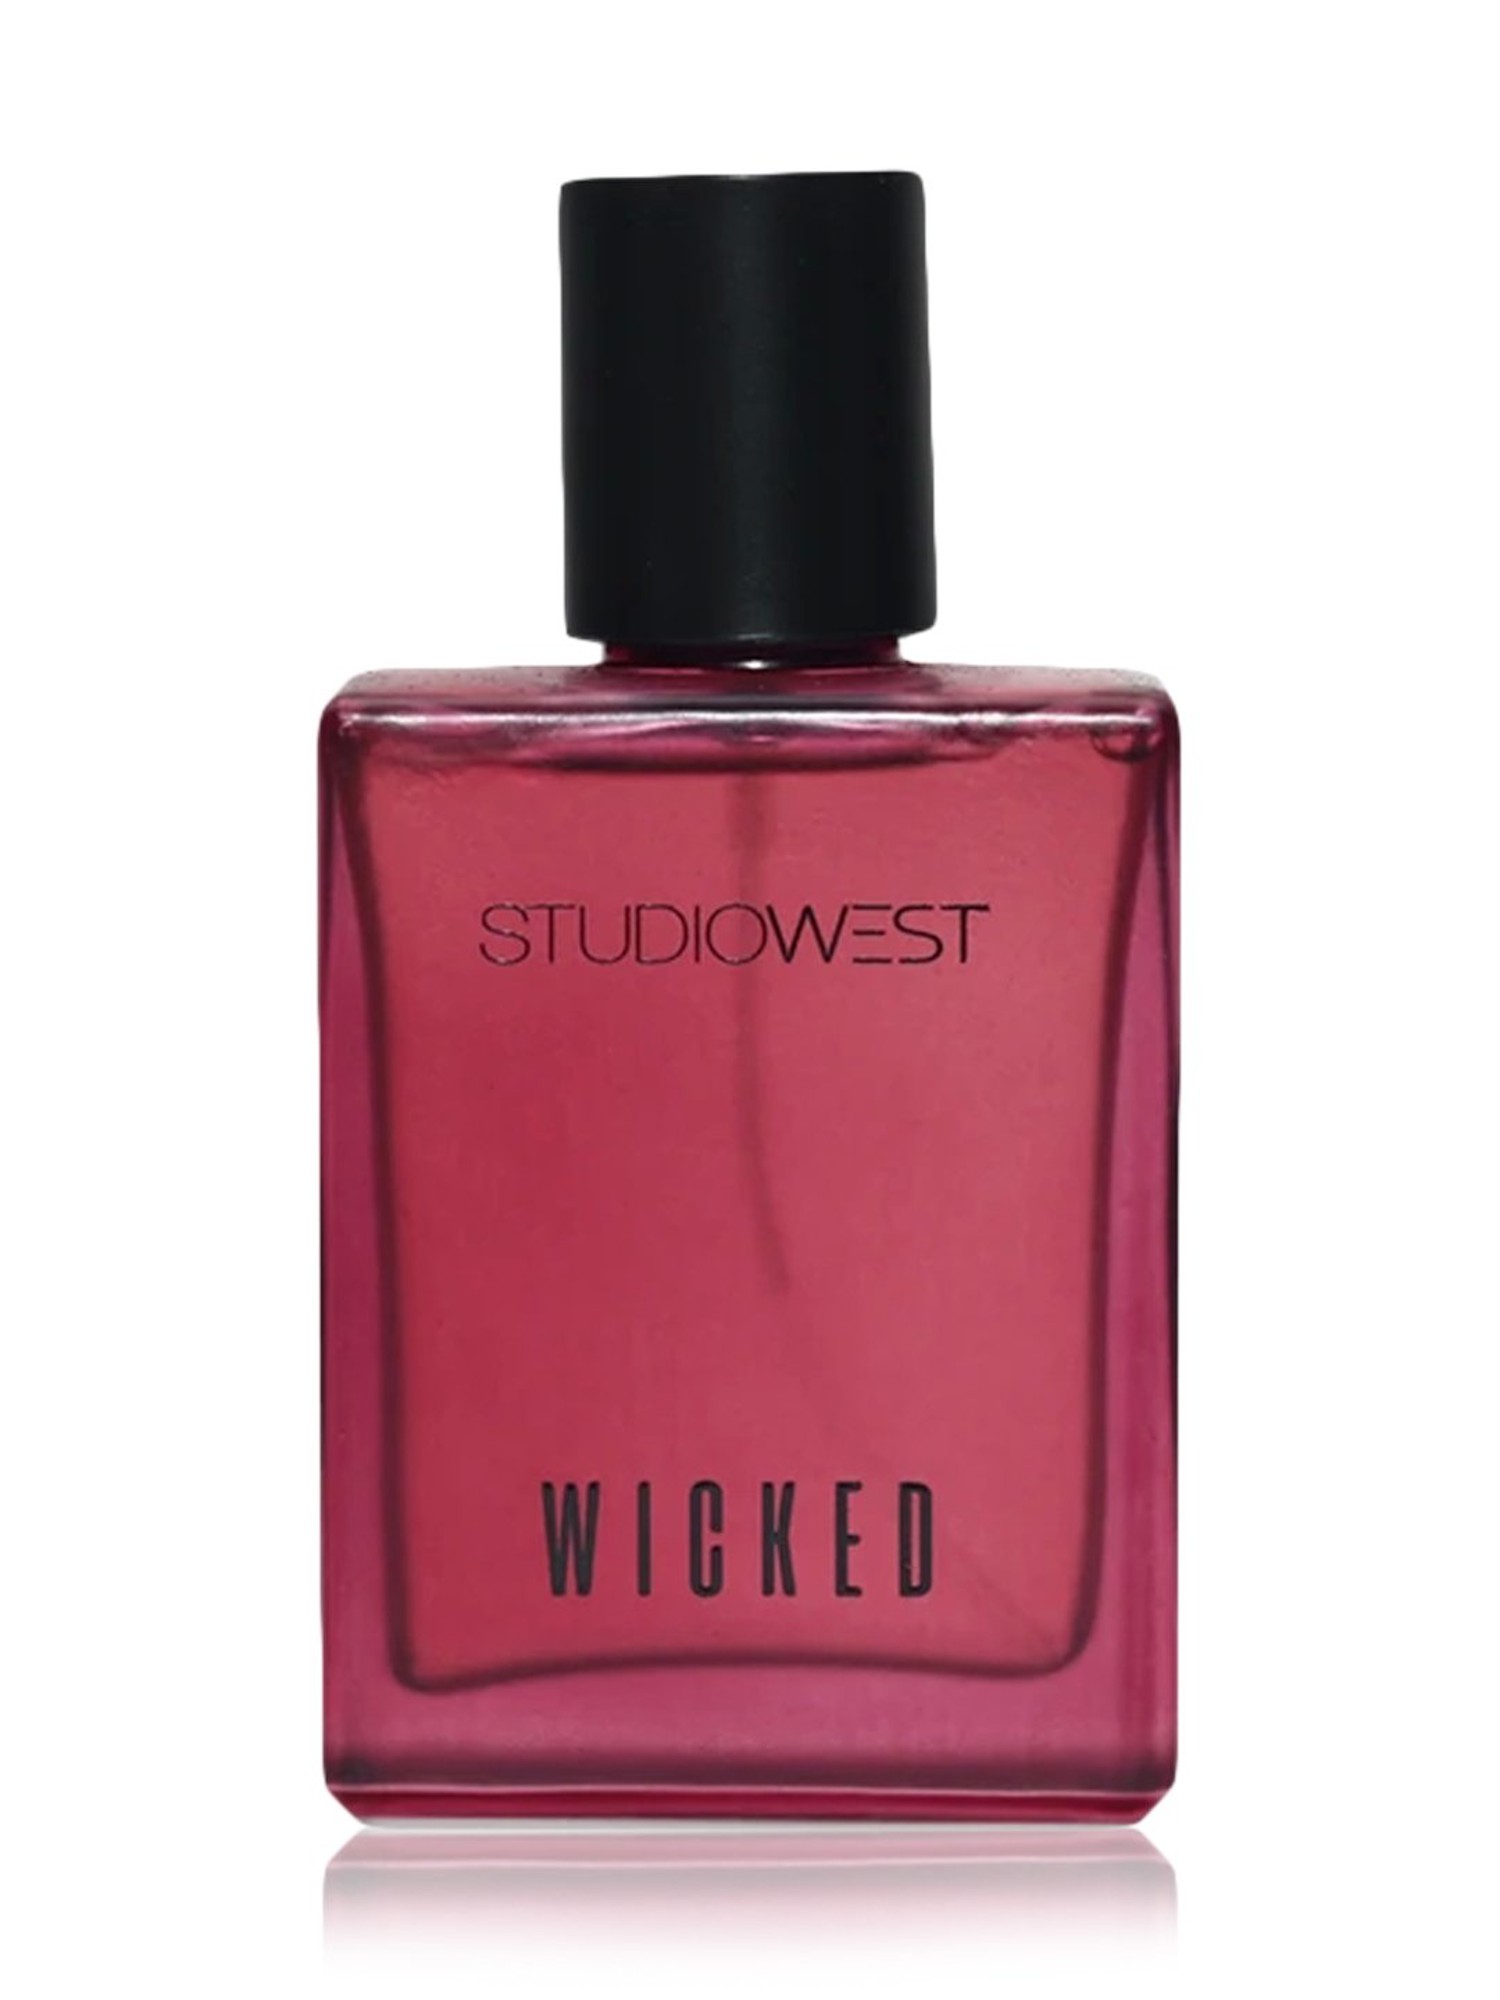  Ria Recommends : Studiowest Wicked by Westside Eau de Parfum For Women - 50ml